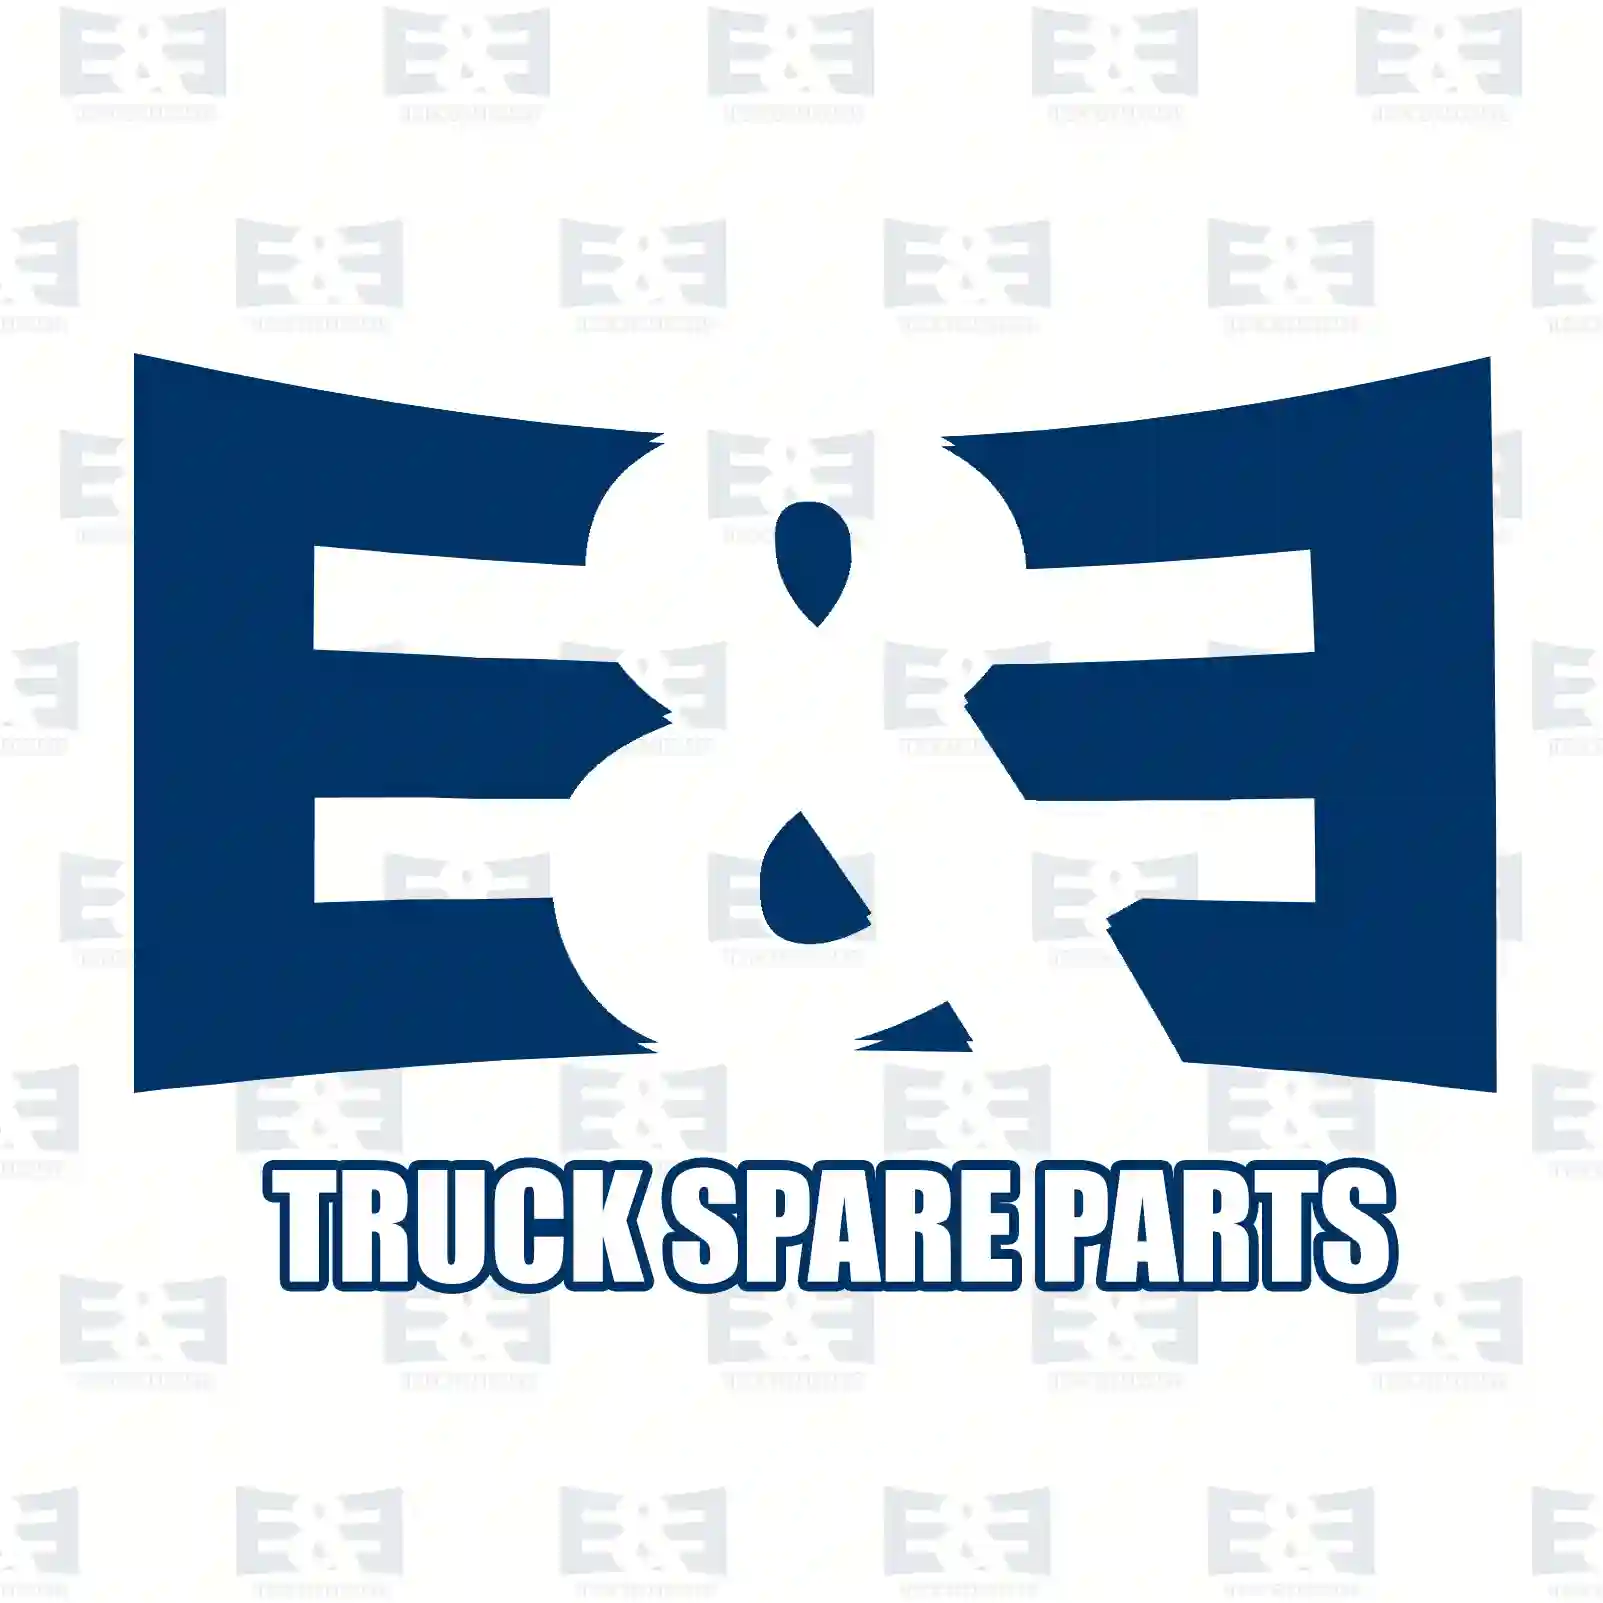 Shock absorber, 2E2283622, 0378225, 0617739, 1283733, 1283733C, 1283743, 378225, 617739, ZG41610-0008 ||  2E2283622 E&E Truck Spare Parts | Truck Spare Parts, Auotomotive Spare Parts Shock absorber, 2E2283622, 0378225, 0617739, 1283733, 1283733C, 1283743, 378225, 617739, ZG41610-0008 ||  2E2283622 E&E Truck Spare Parts | Truck Spare Parts, Auotomotive Spare Parts